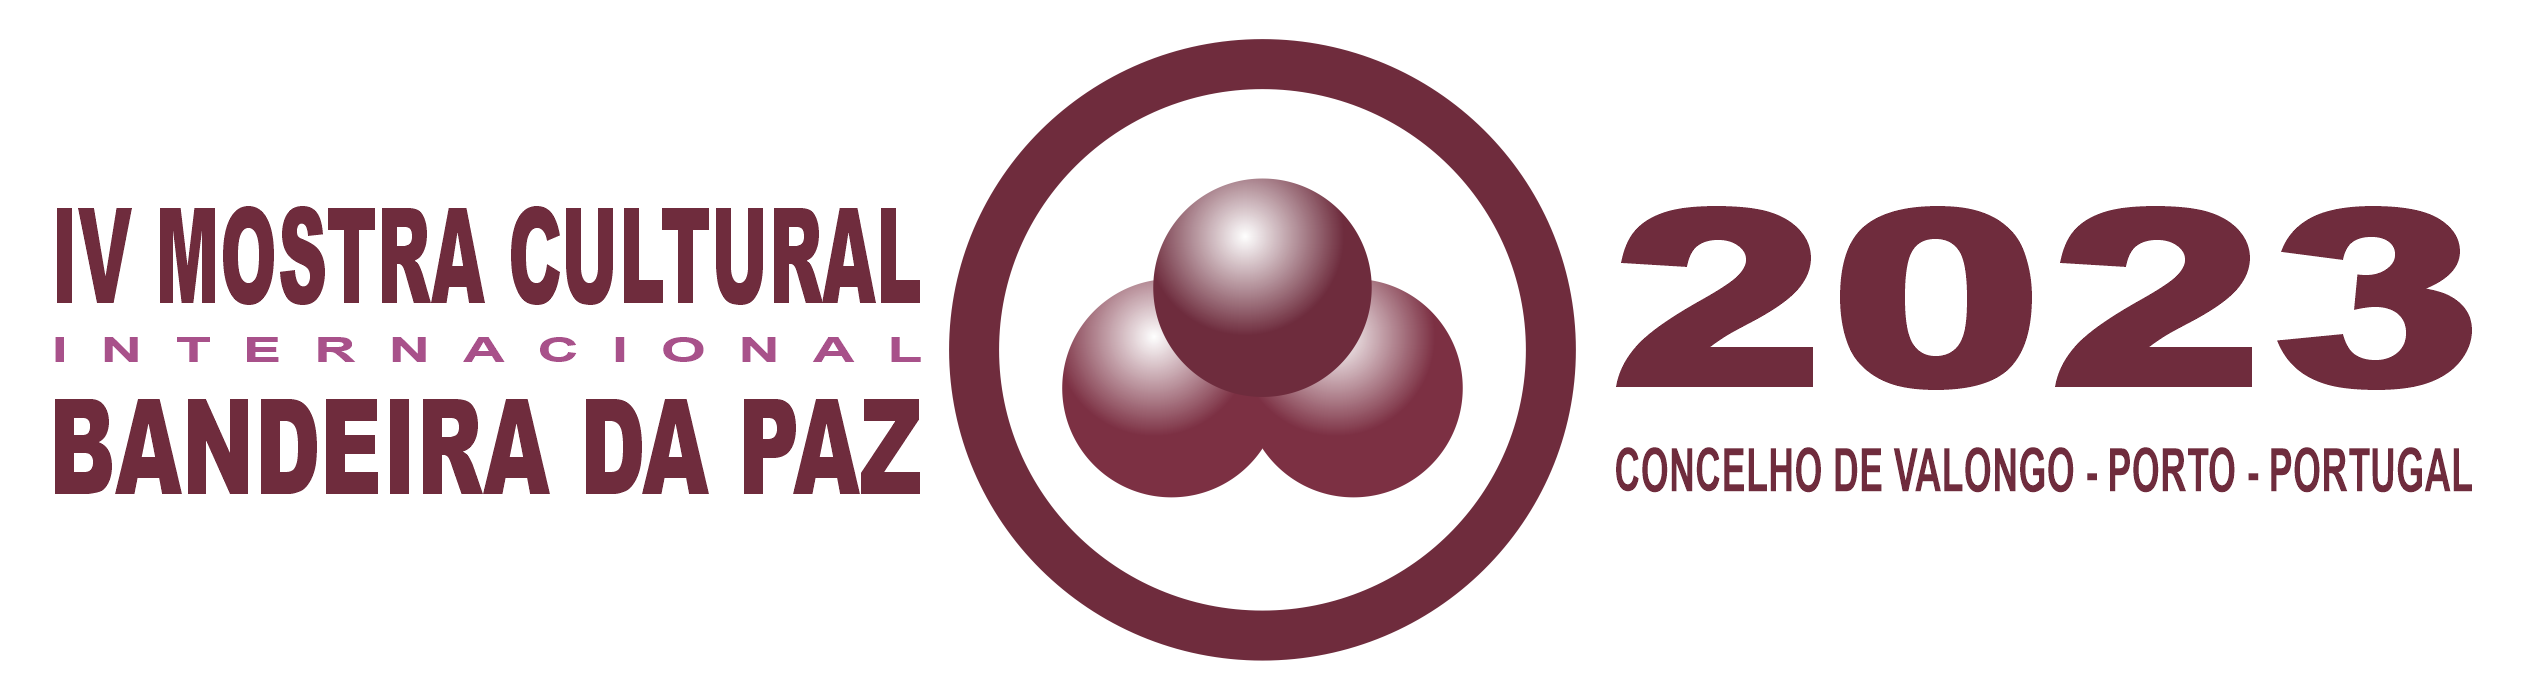 Logos IV MOSTRA 2023_VALONGO